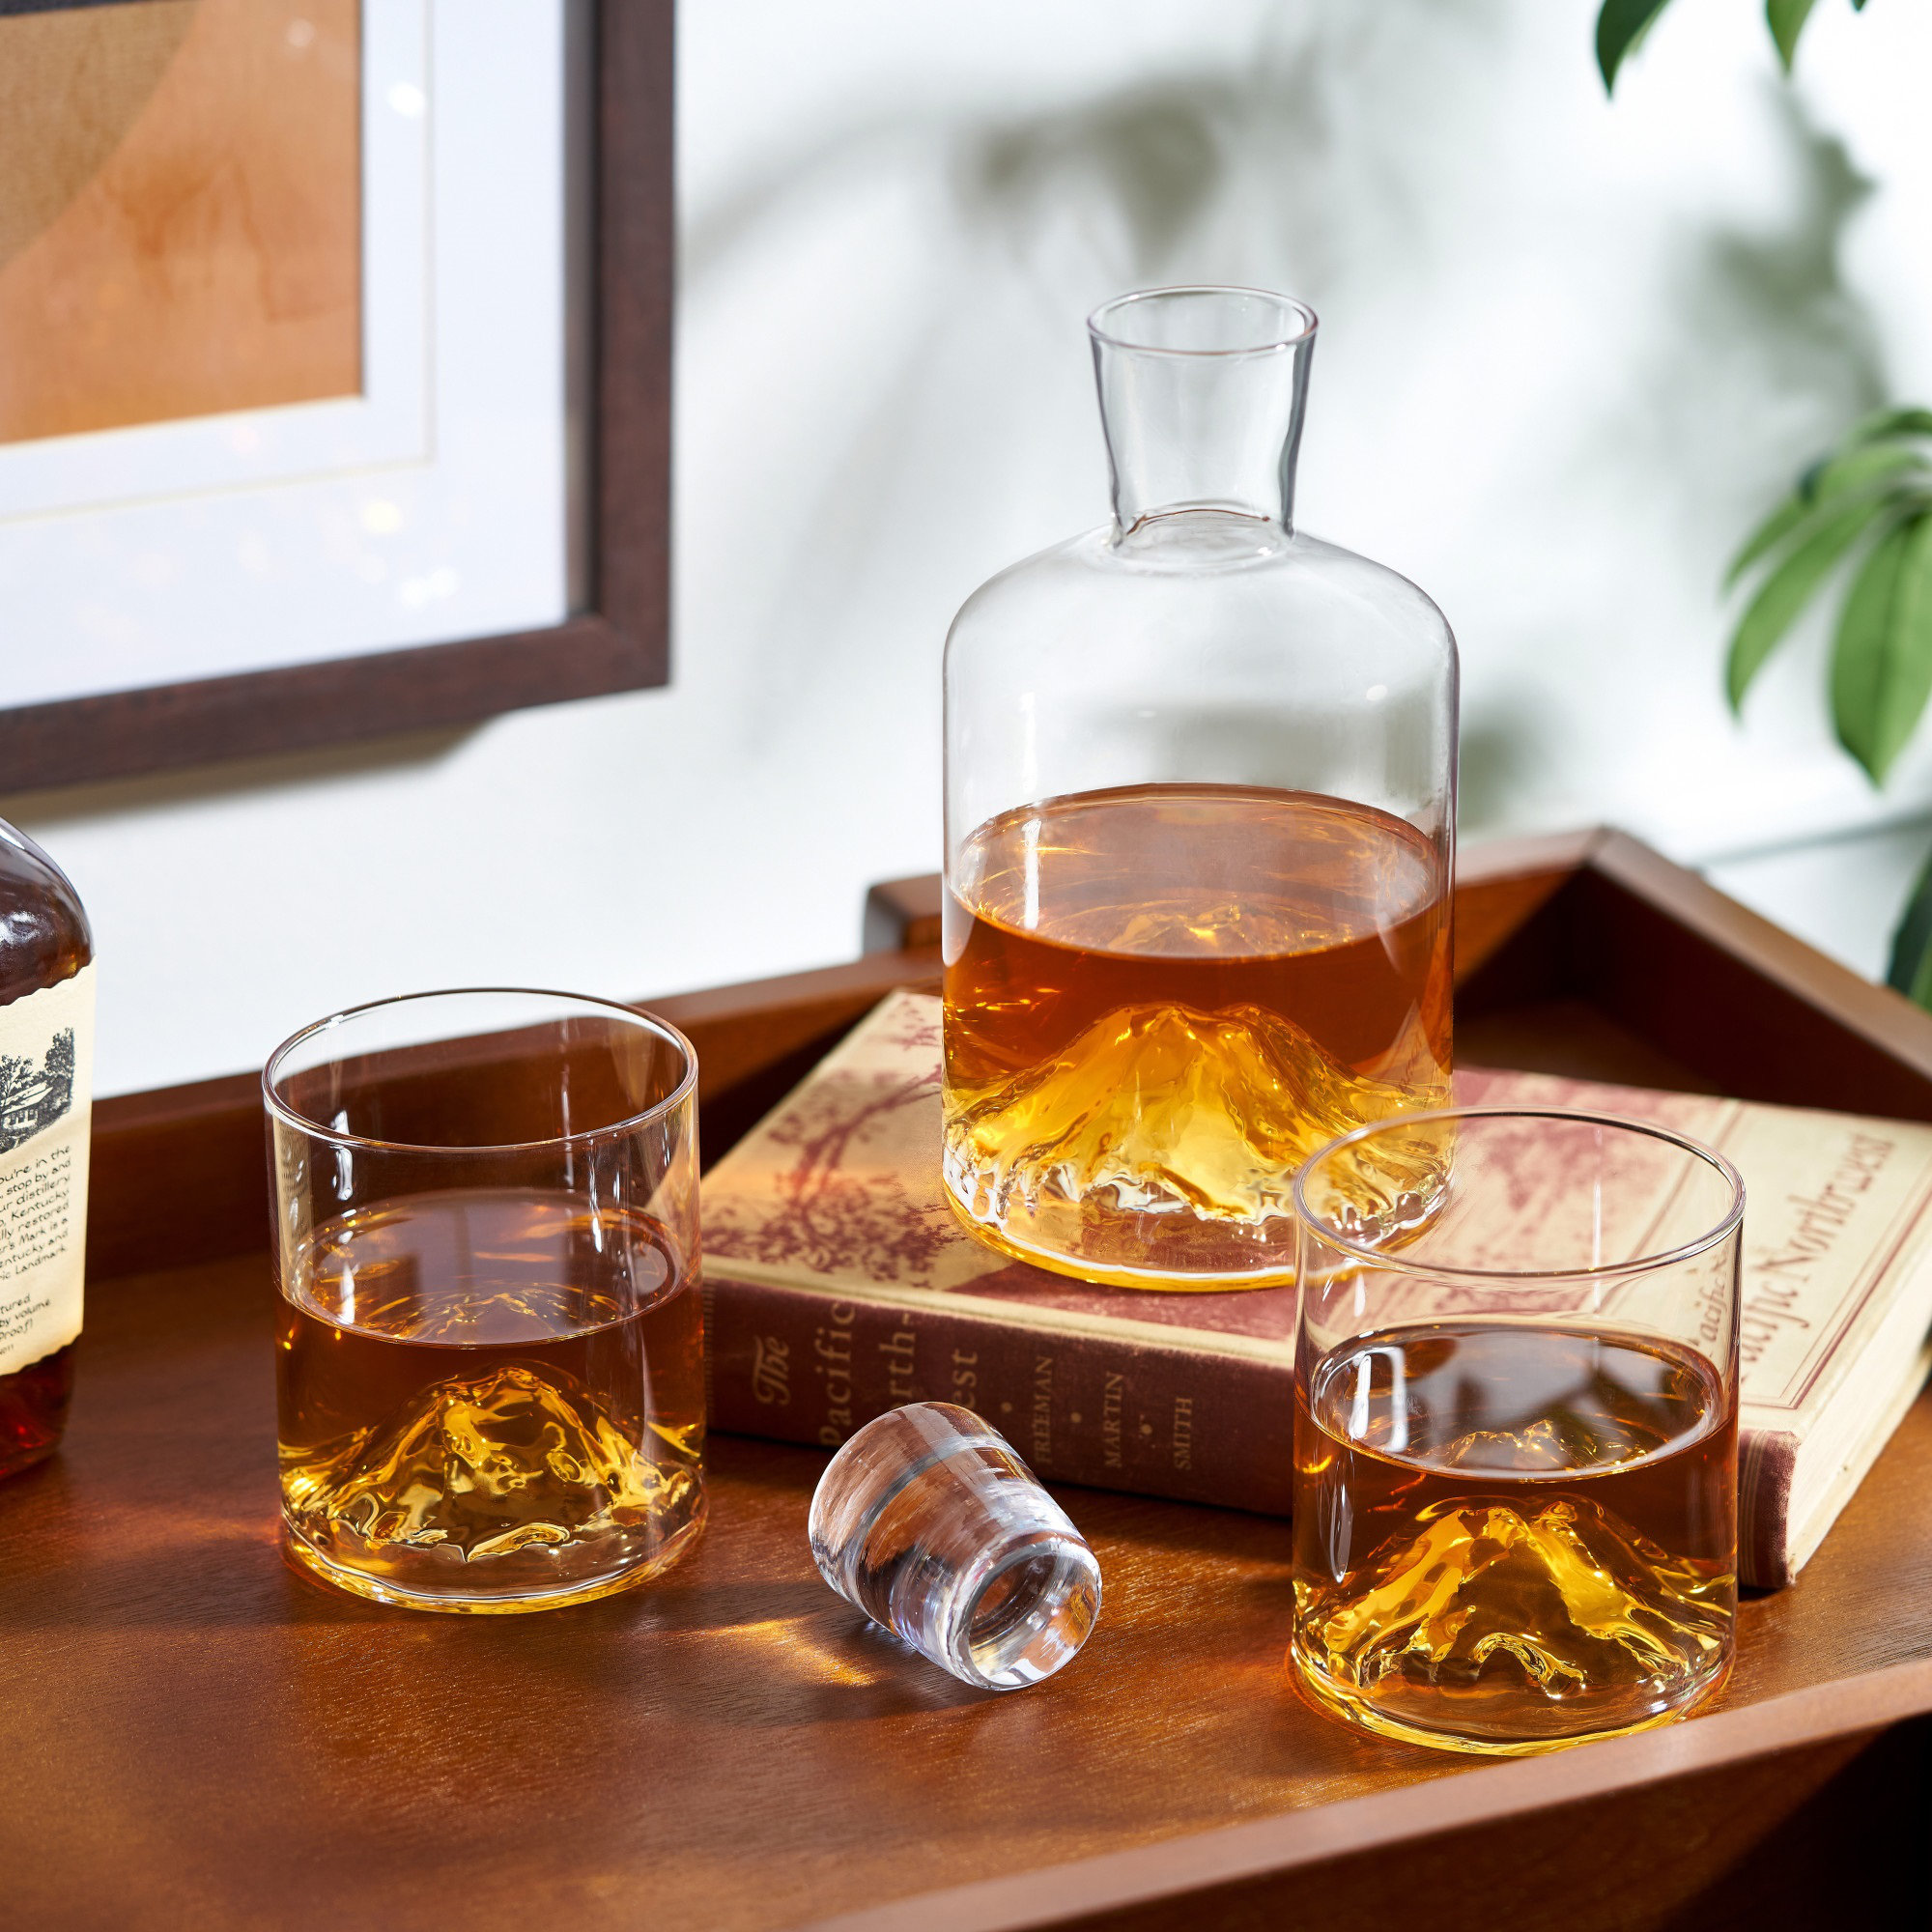 Pacific Northwest - Set of 4 Whiskey Glasses